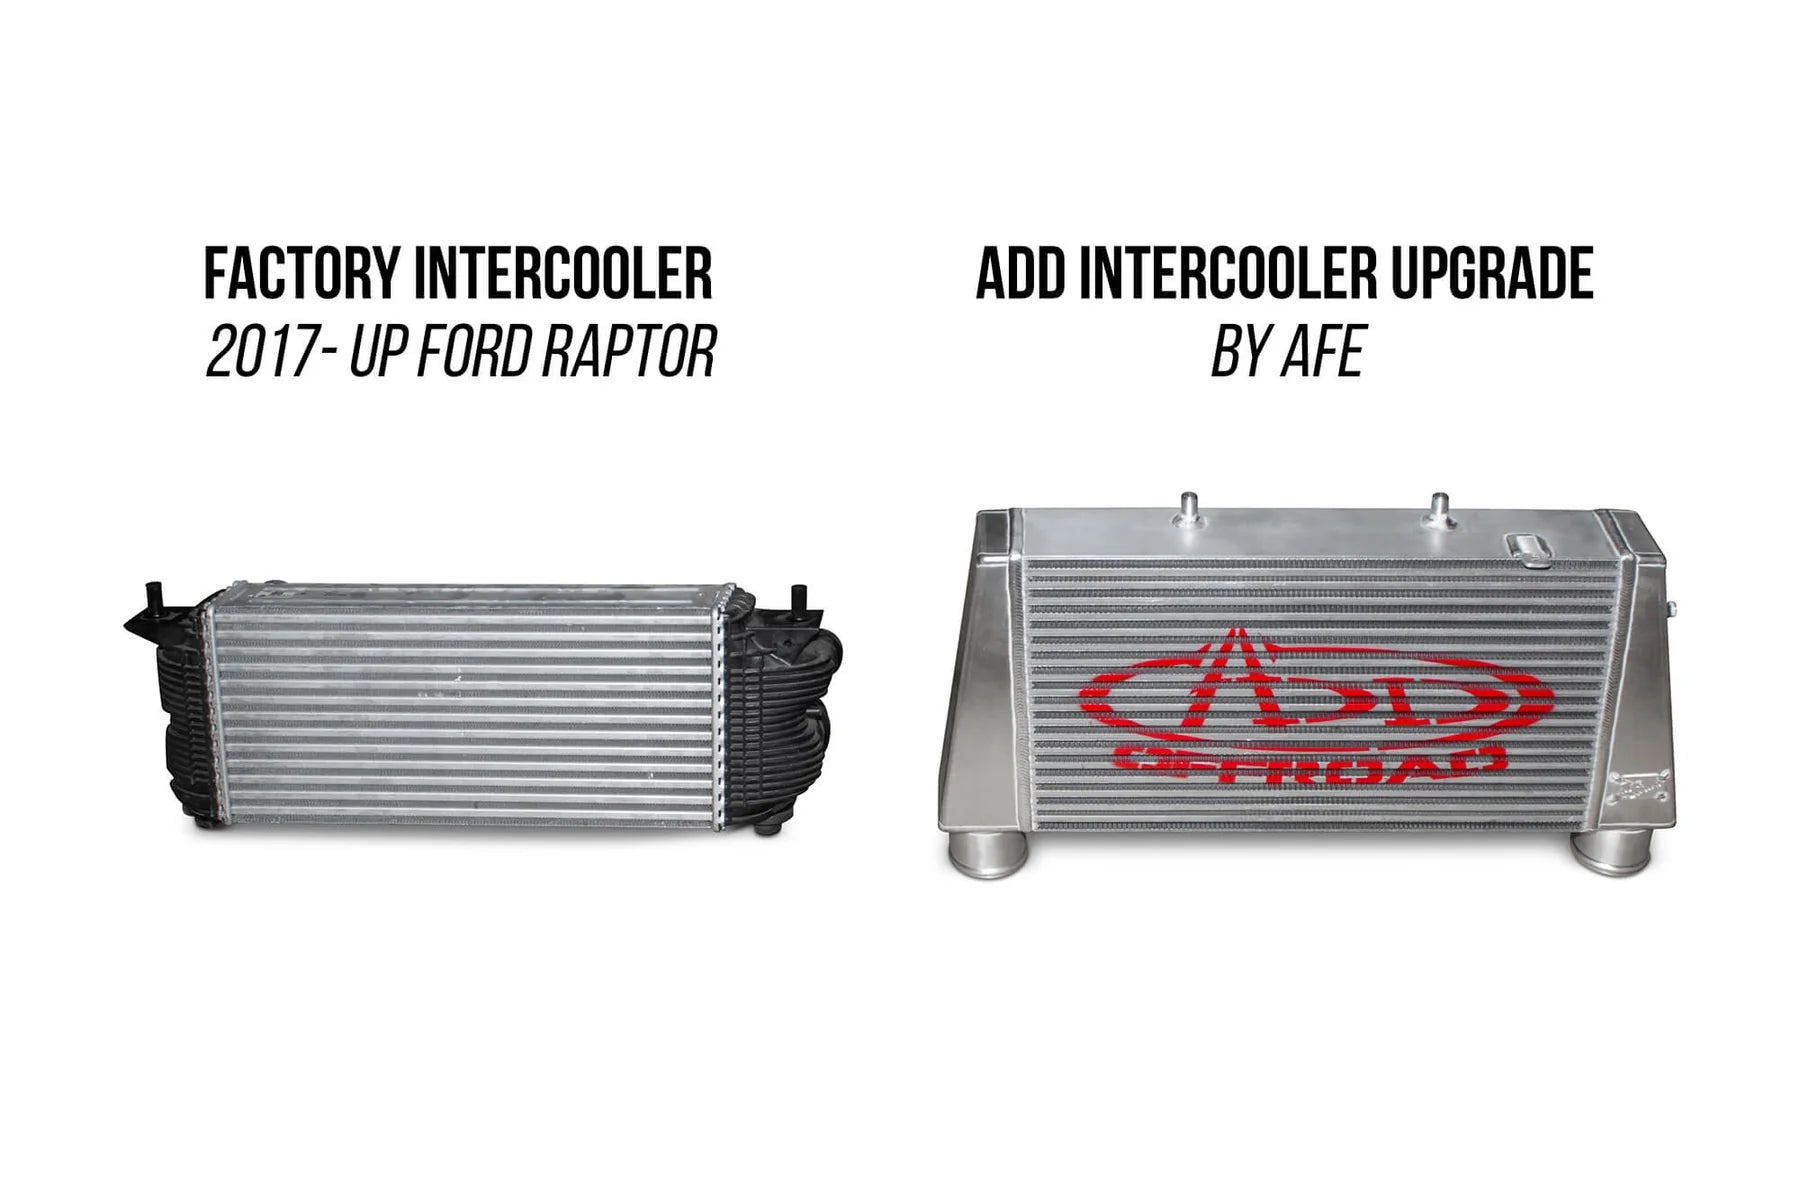 ADD Intercooler Upgrade Kit by aFe